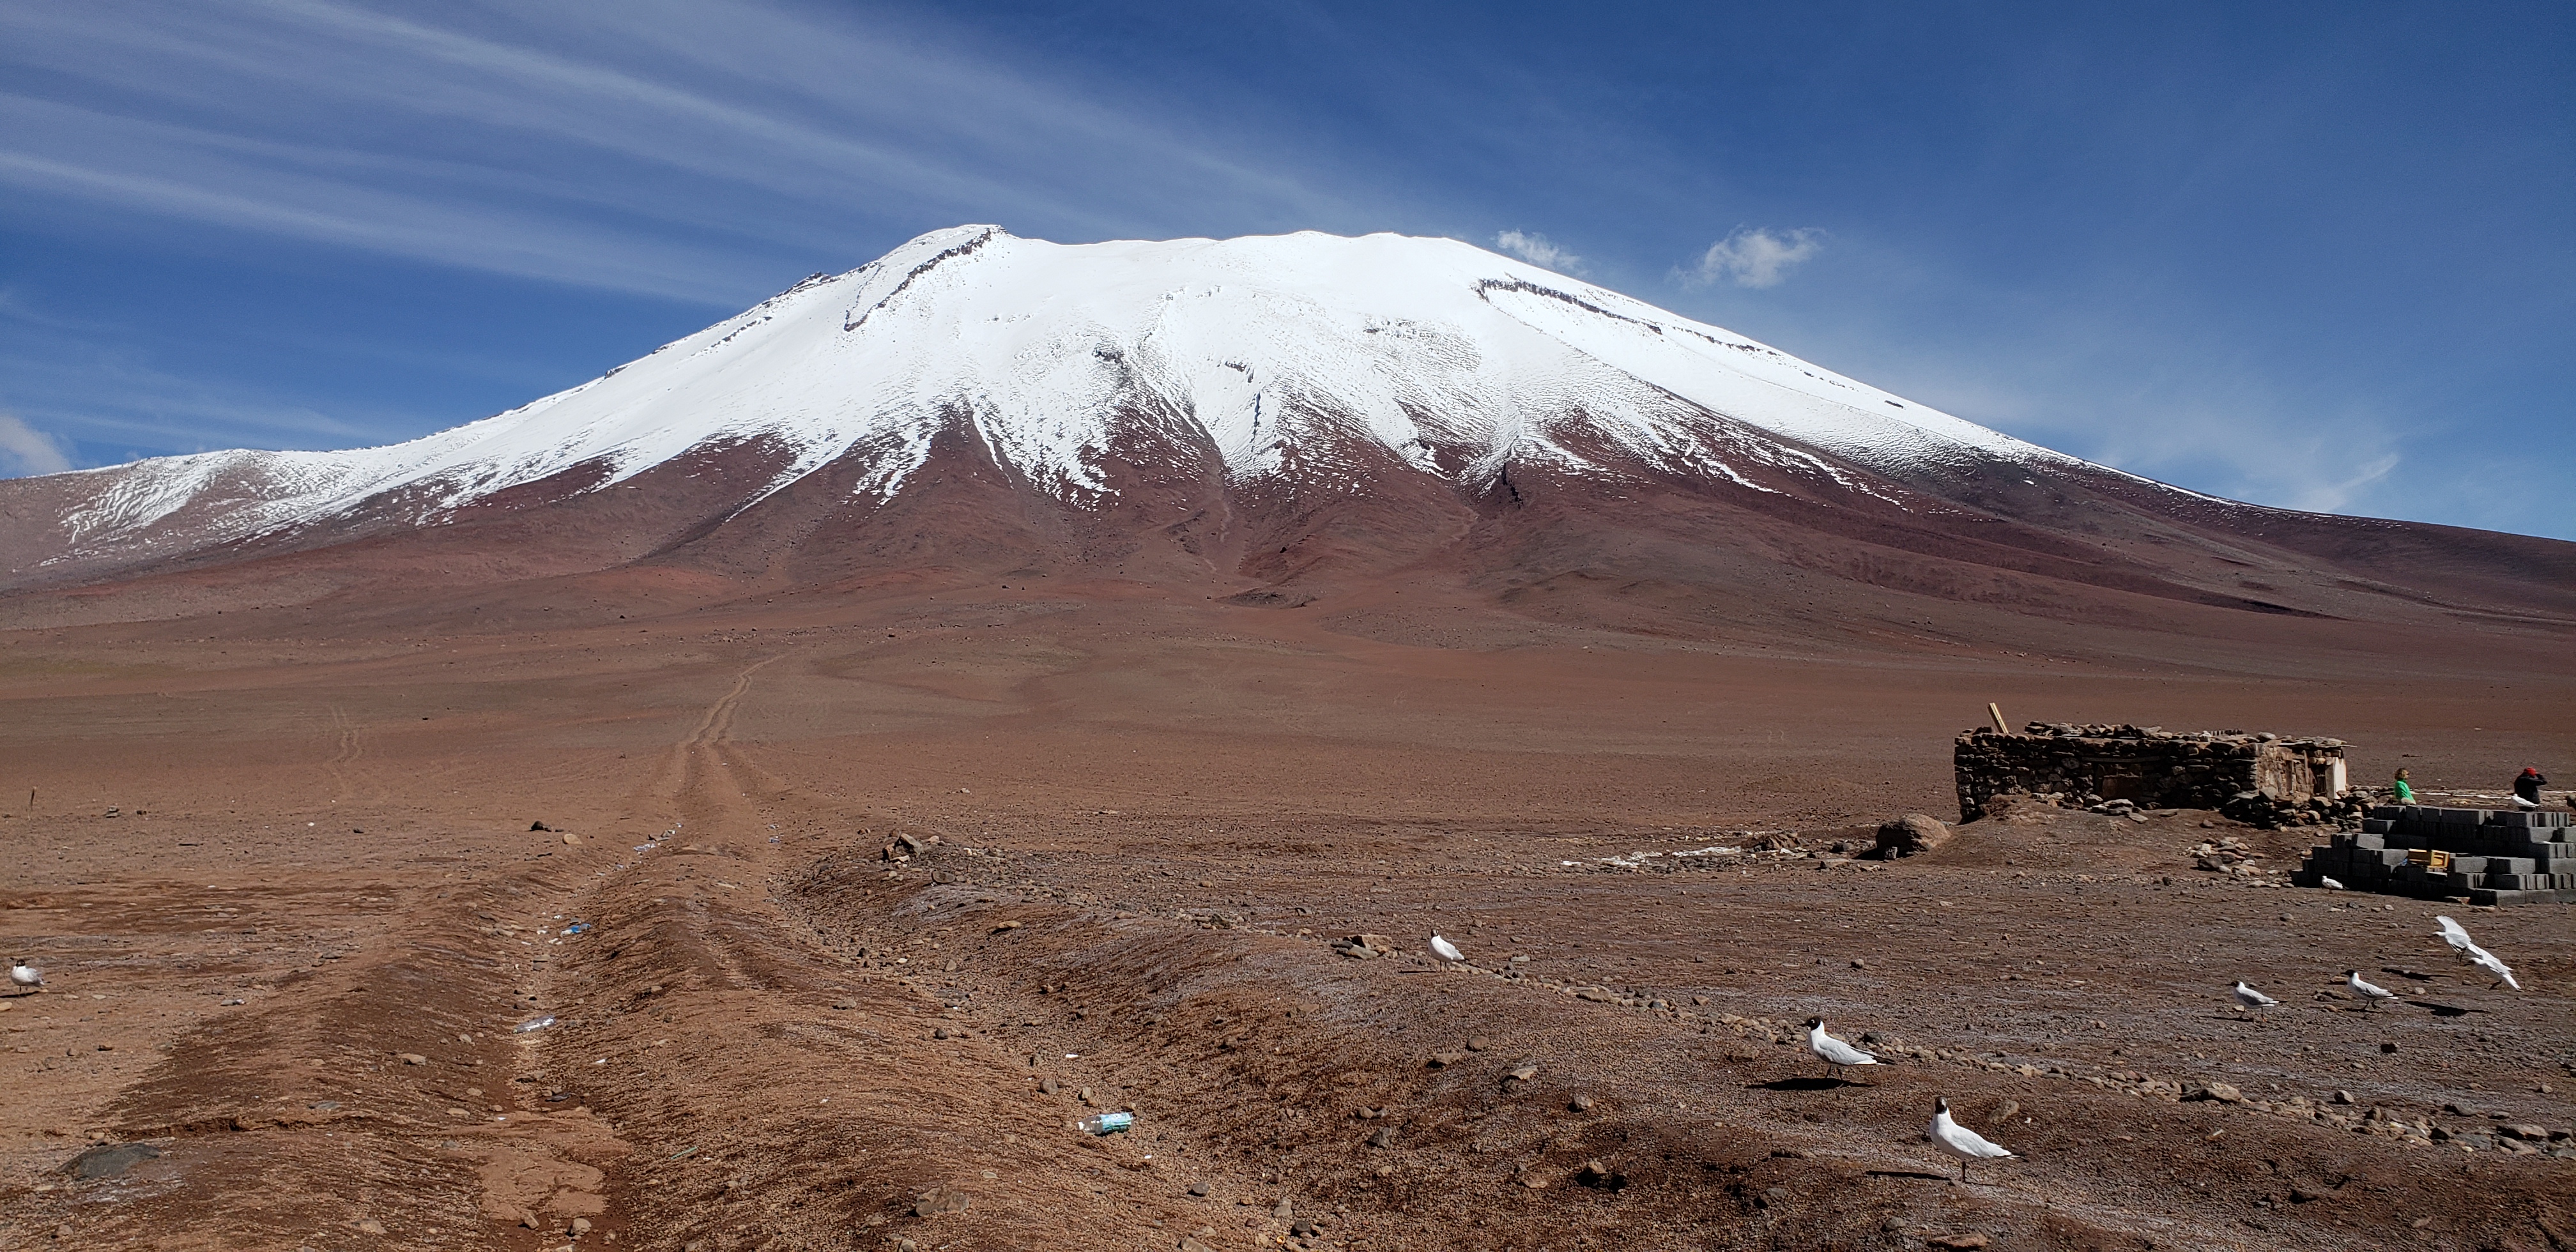 The Juriques Volcano, Bolivian Highlands (Altiplano Boliviano) at 4,350 meters (14,270 feet), Sur Lípez, Potosí, Bolivia.